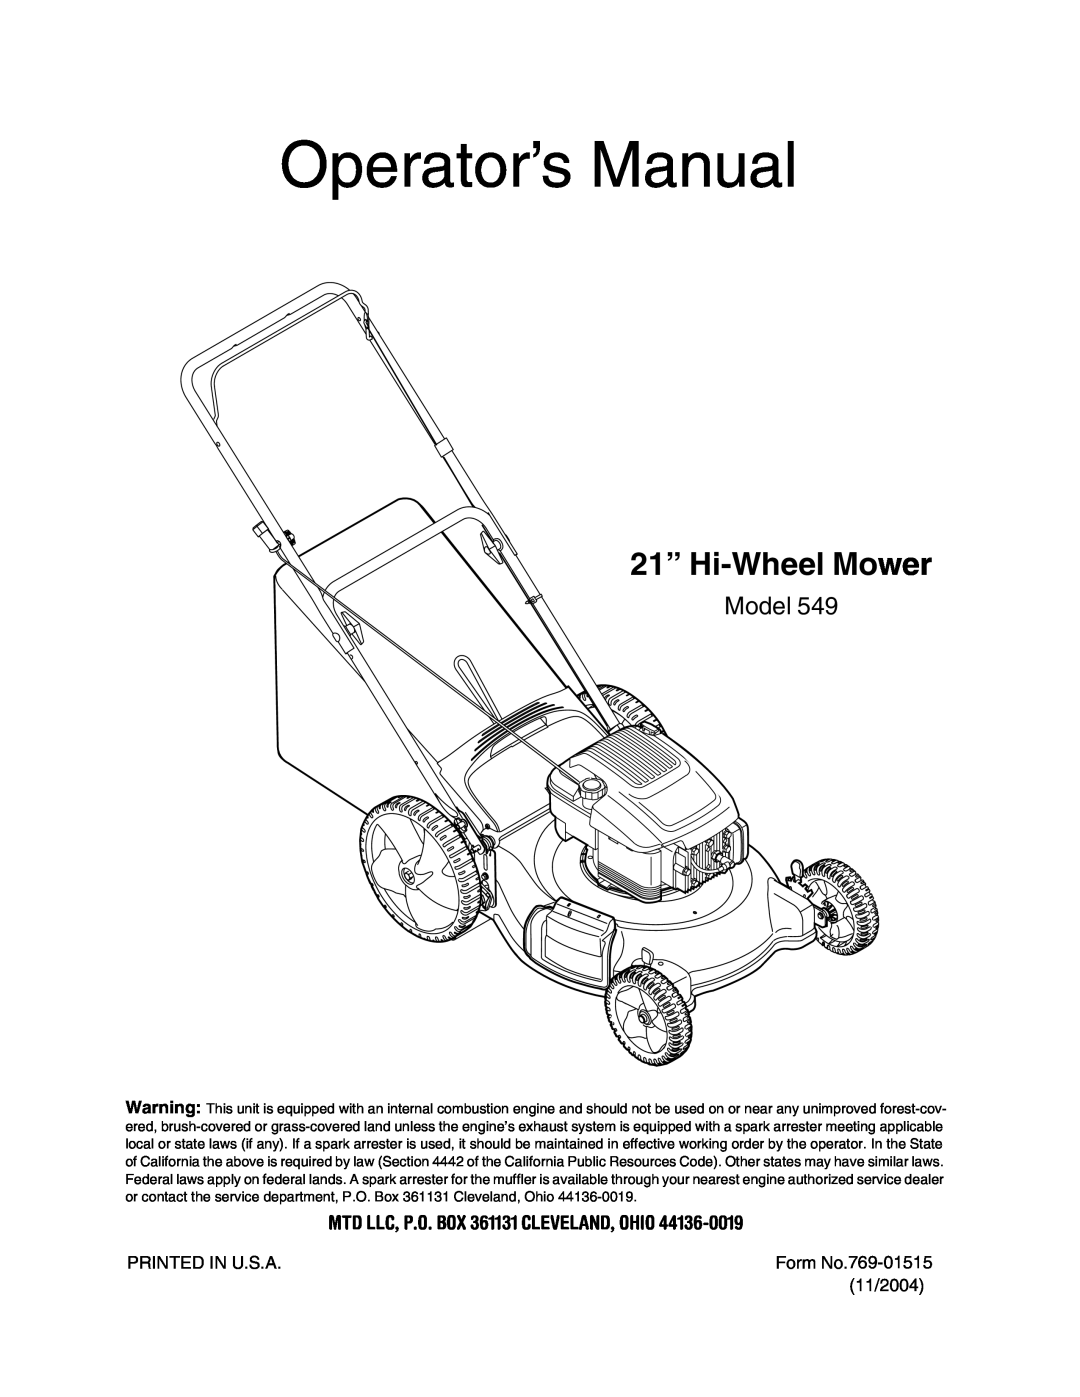 MTD 549 manual Operator’s Manual, 21” Hi-Wheel Mower, Model, MTD LLC, P.O. BOX 361131 CLEVELAND, OHIO 